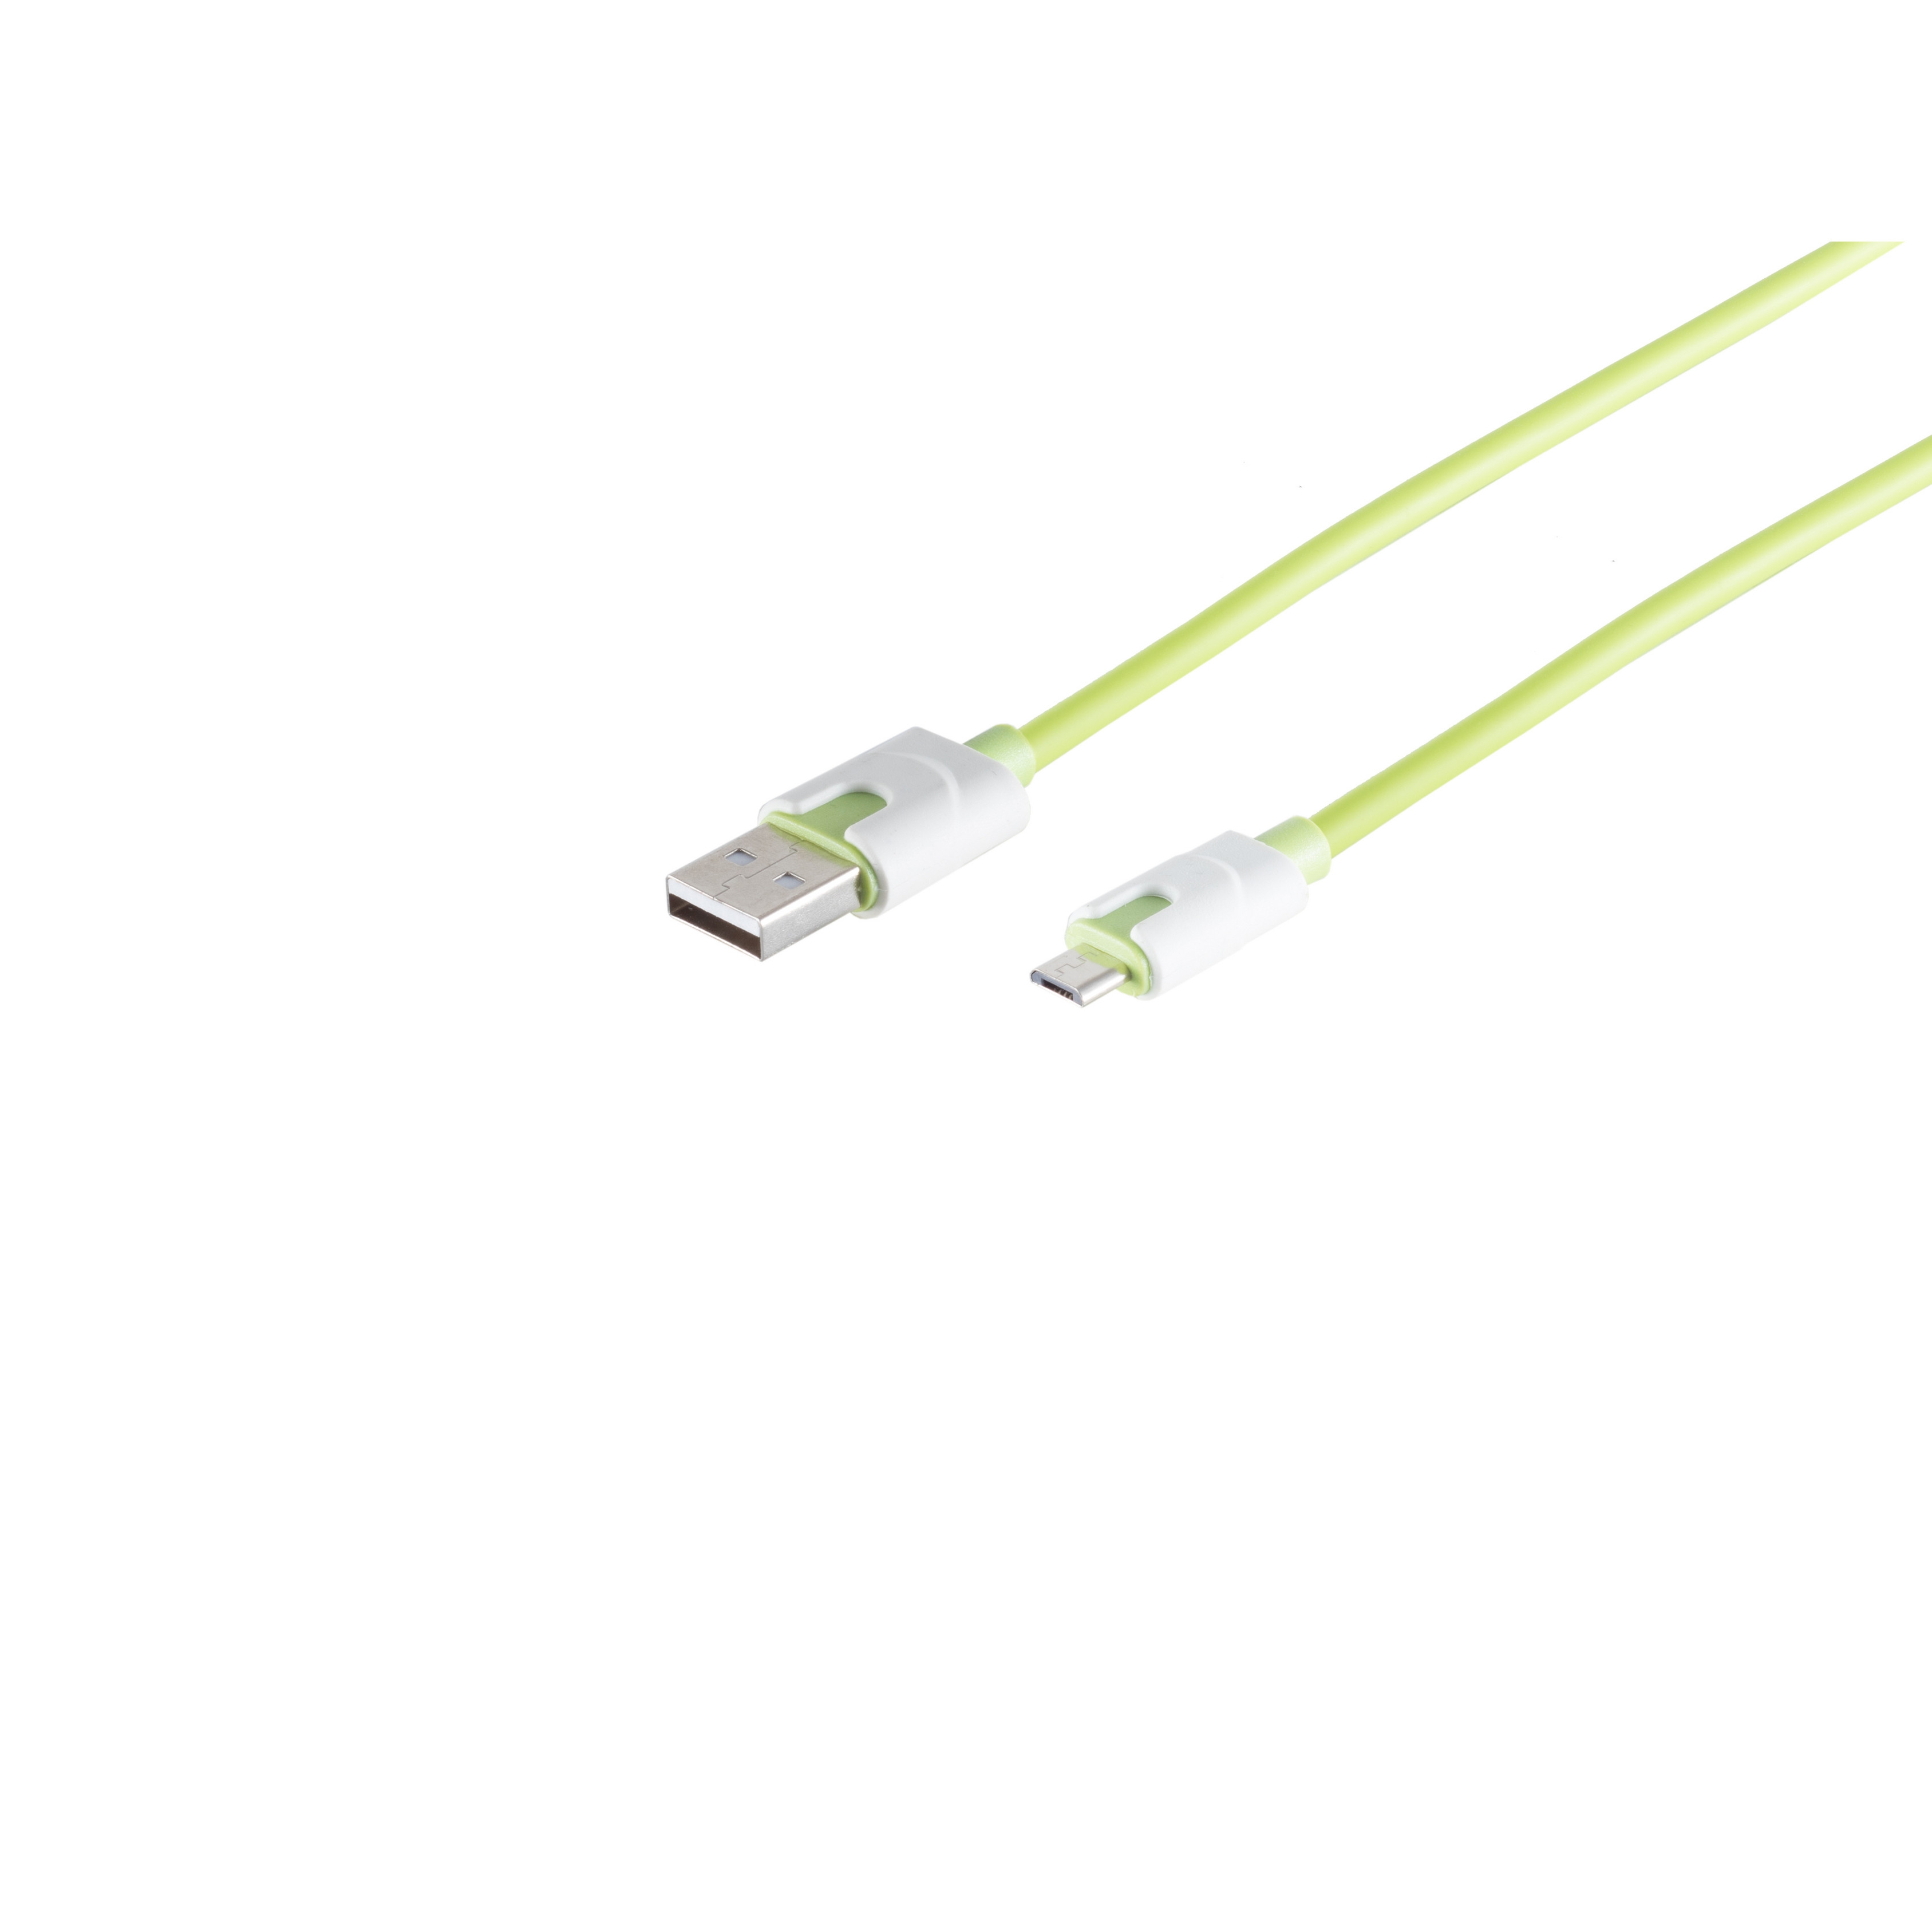 S/CONN MAXIMUM auf USB grün USB-Ladekabel CONNECTIVITY Stecker Kabel USB 0,9m B, A Micro